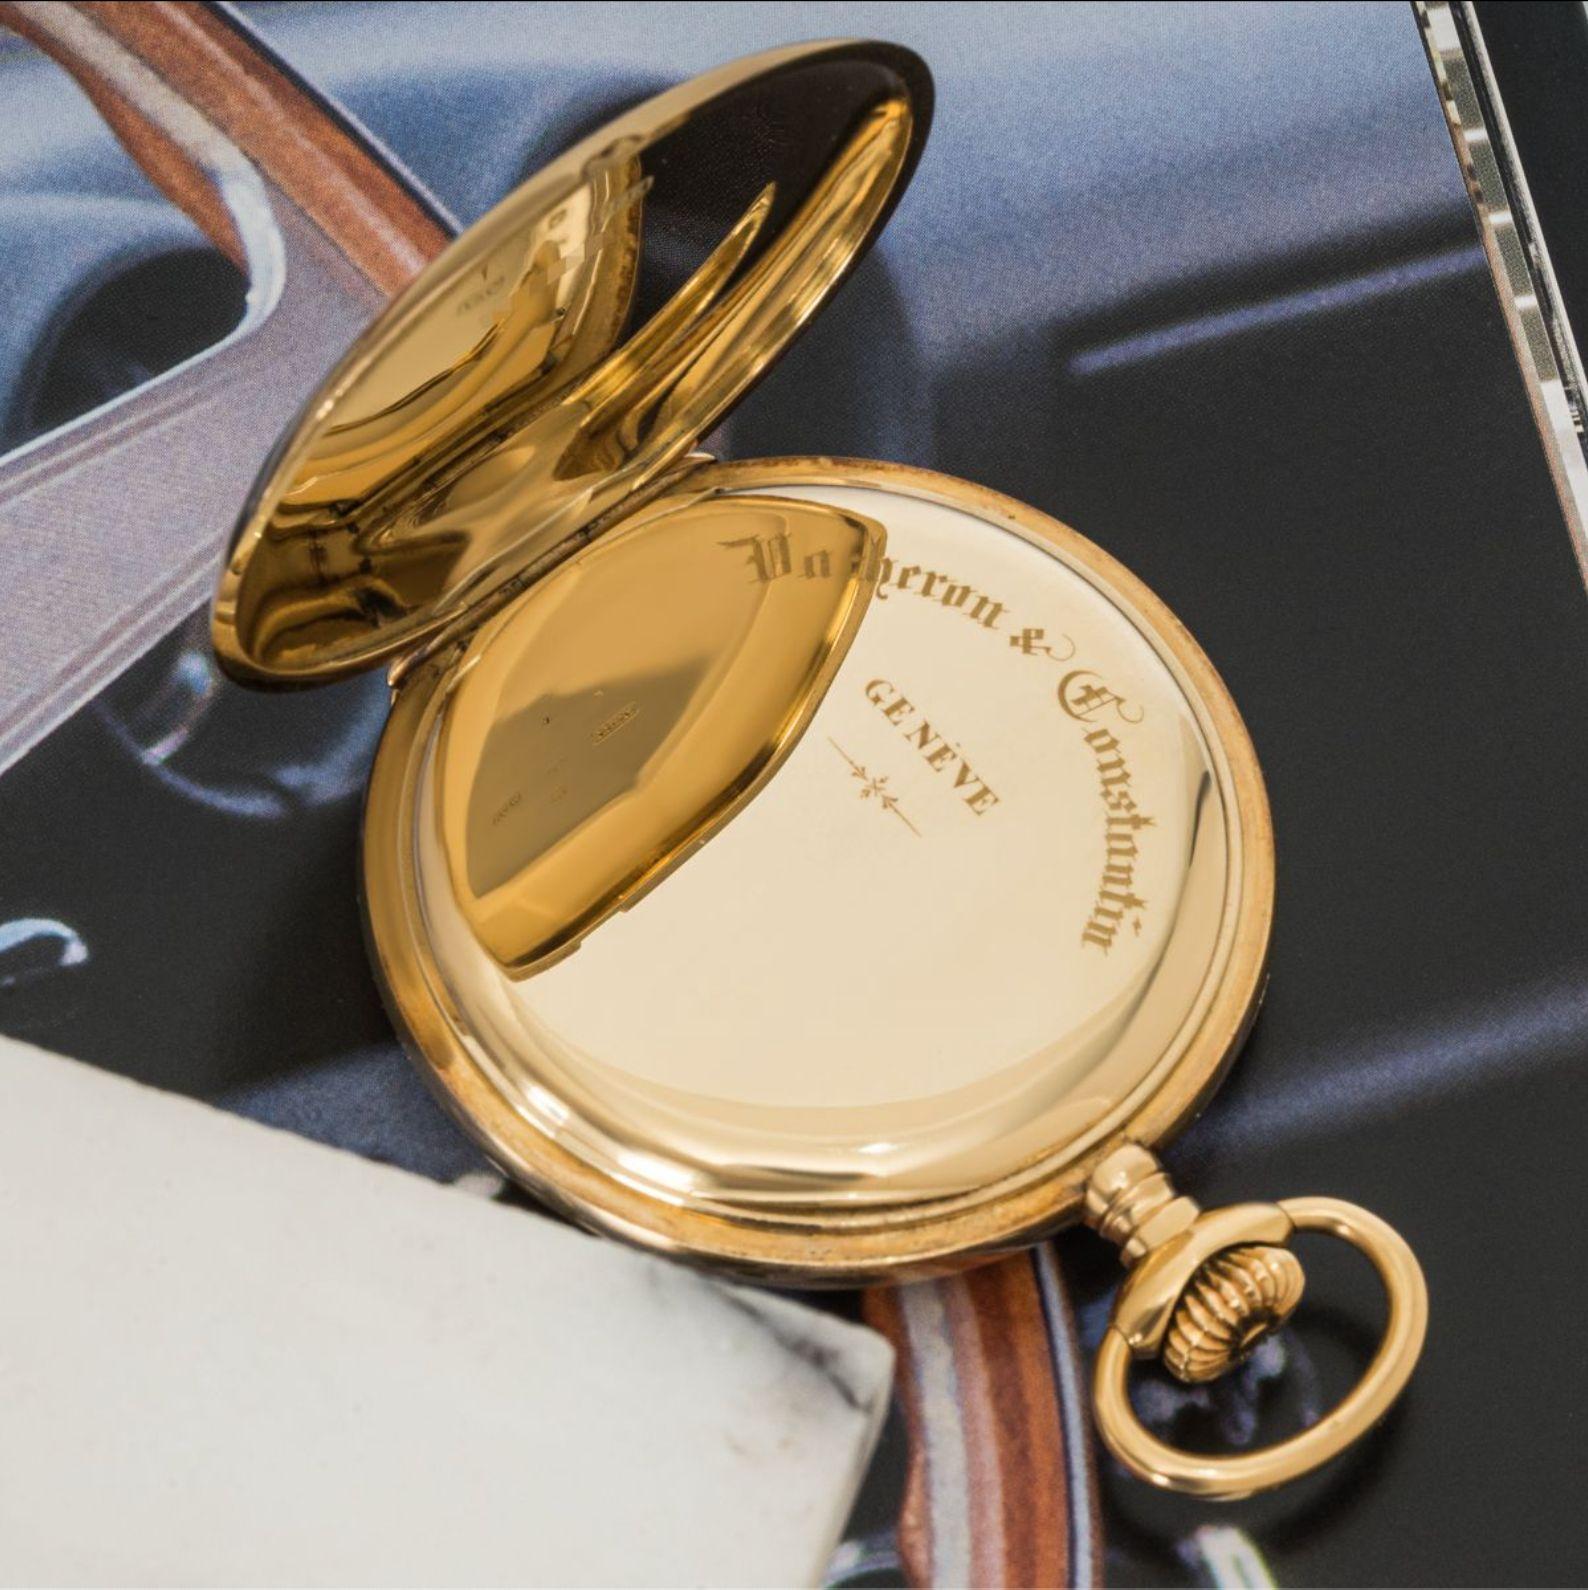 Vacheron Constantin Chronometer Royal Gold Open Face Pocket Watch C1910 For Sale 1